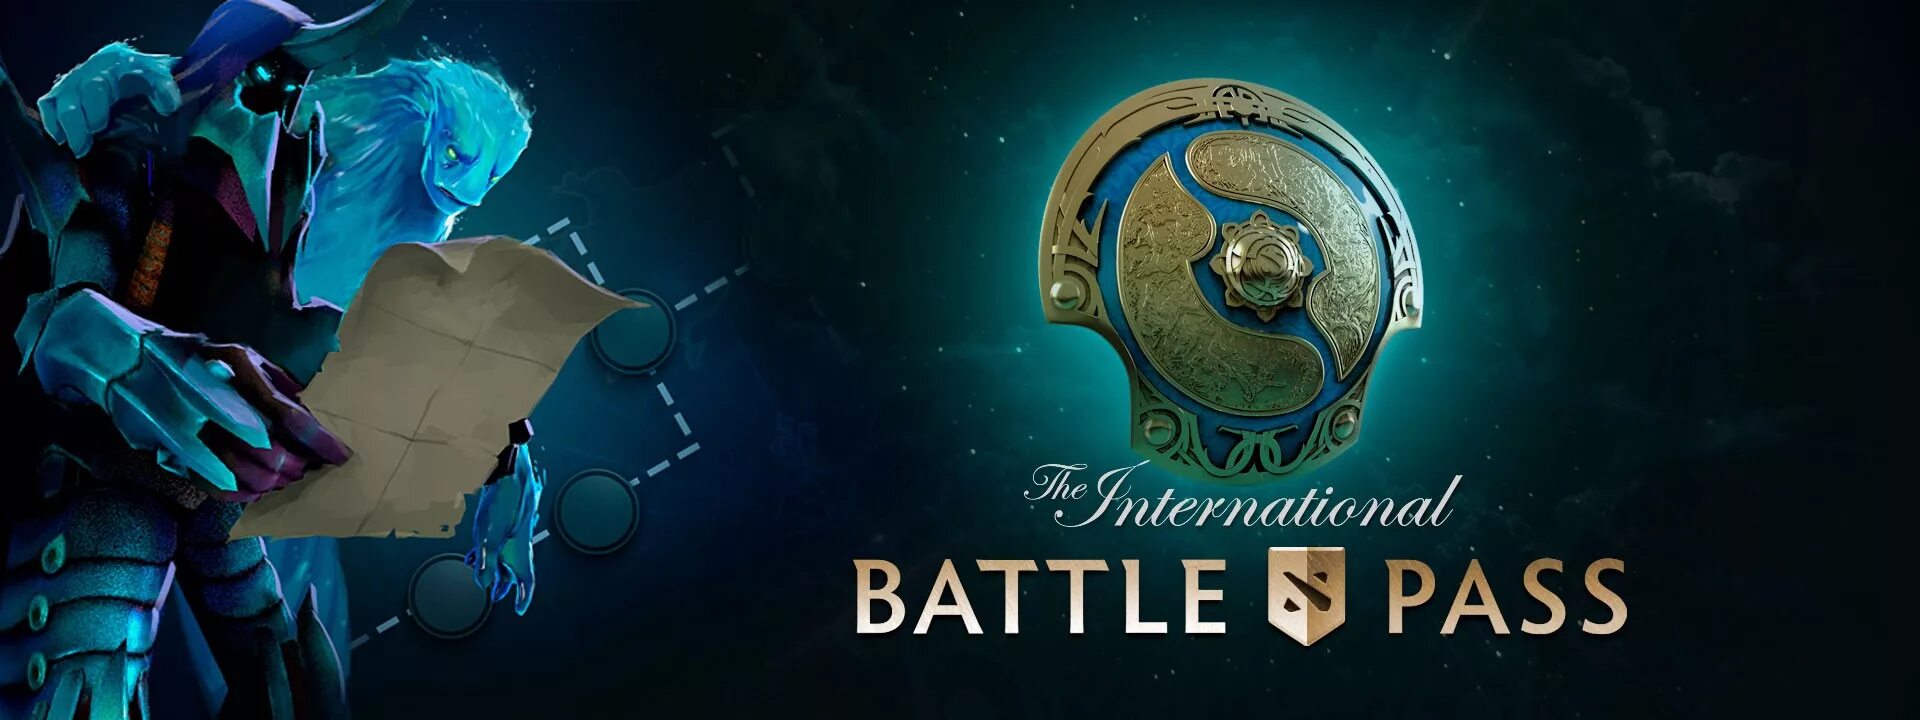 Battle Pass АБУЗ. Battle Pass Dota 2 АБУЗ. Dota 2 the International Battle Pass. Battle Pass 2017. Battle pa